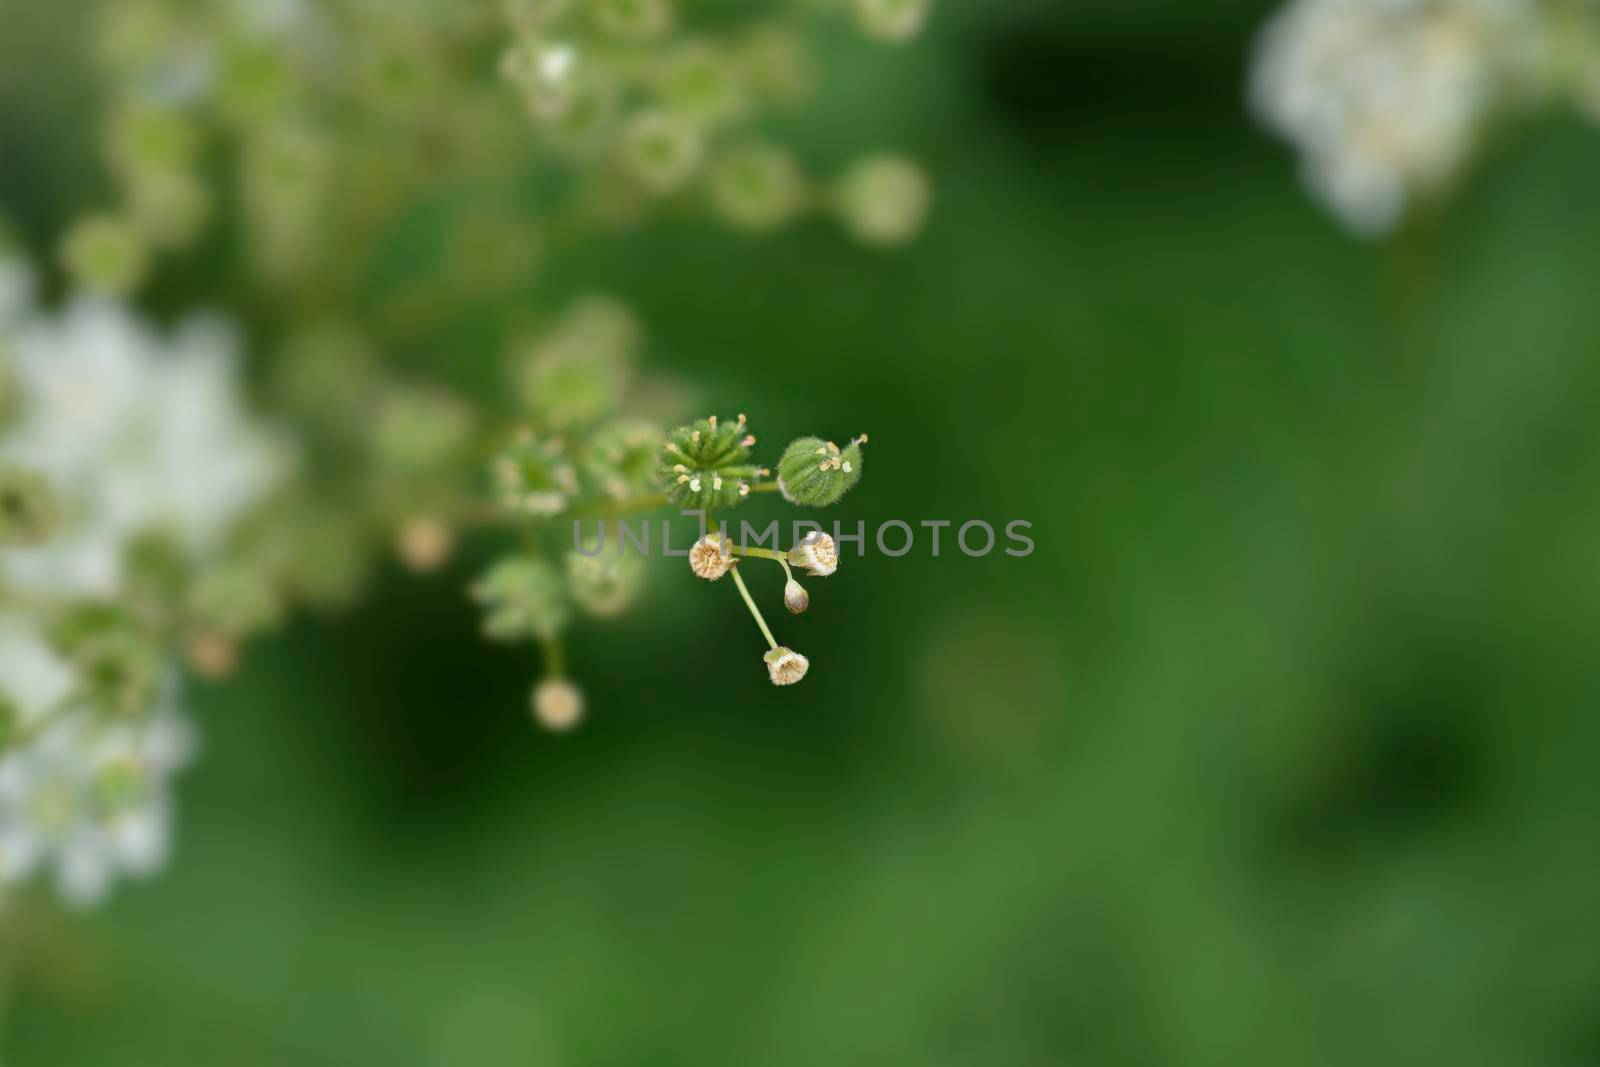 Fern-leaf dropwort seeds - Latin name - Filipendula vulgaris